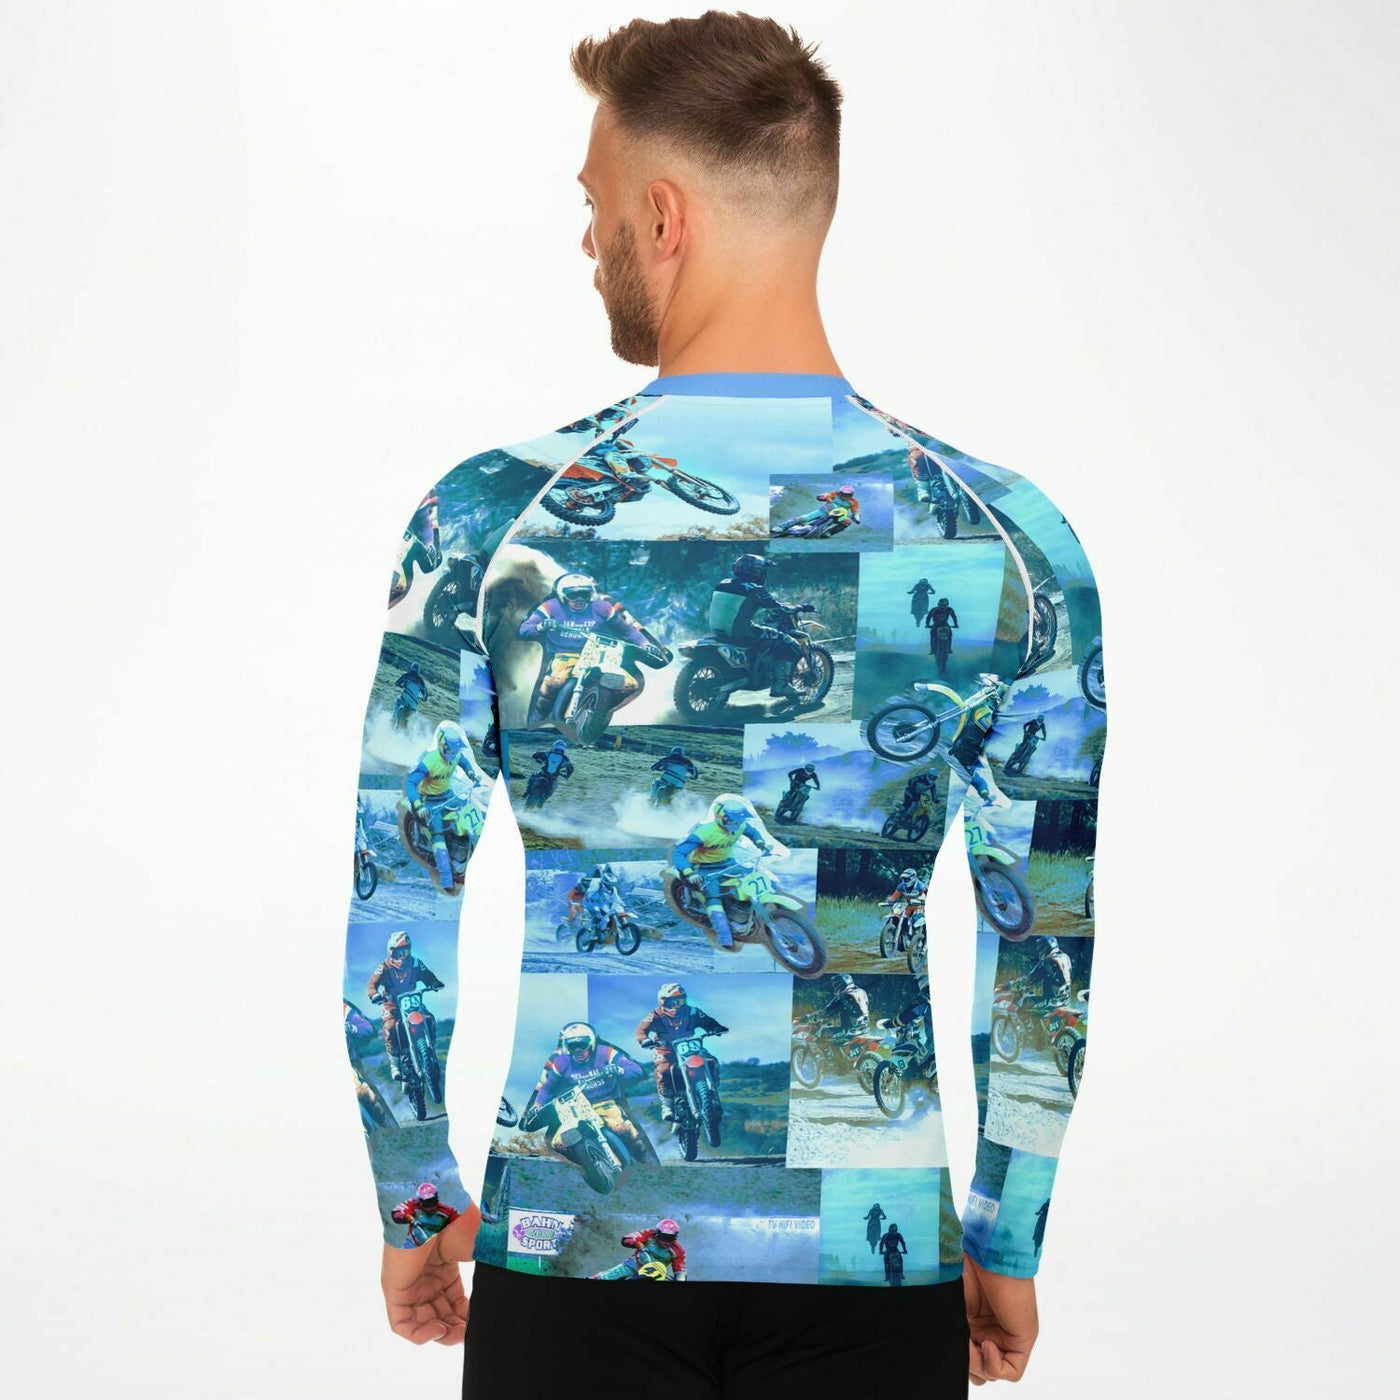 Tyler Durden Rashguard Surf Shirt with Retro Dirt Bikes Collage - Fight Club Fashion